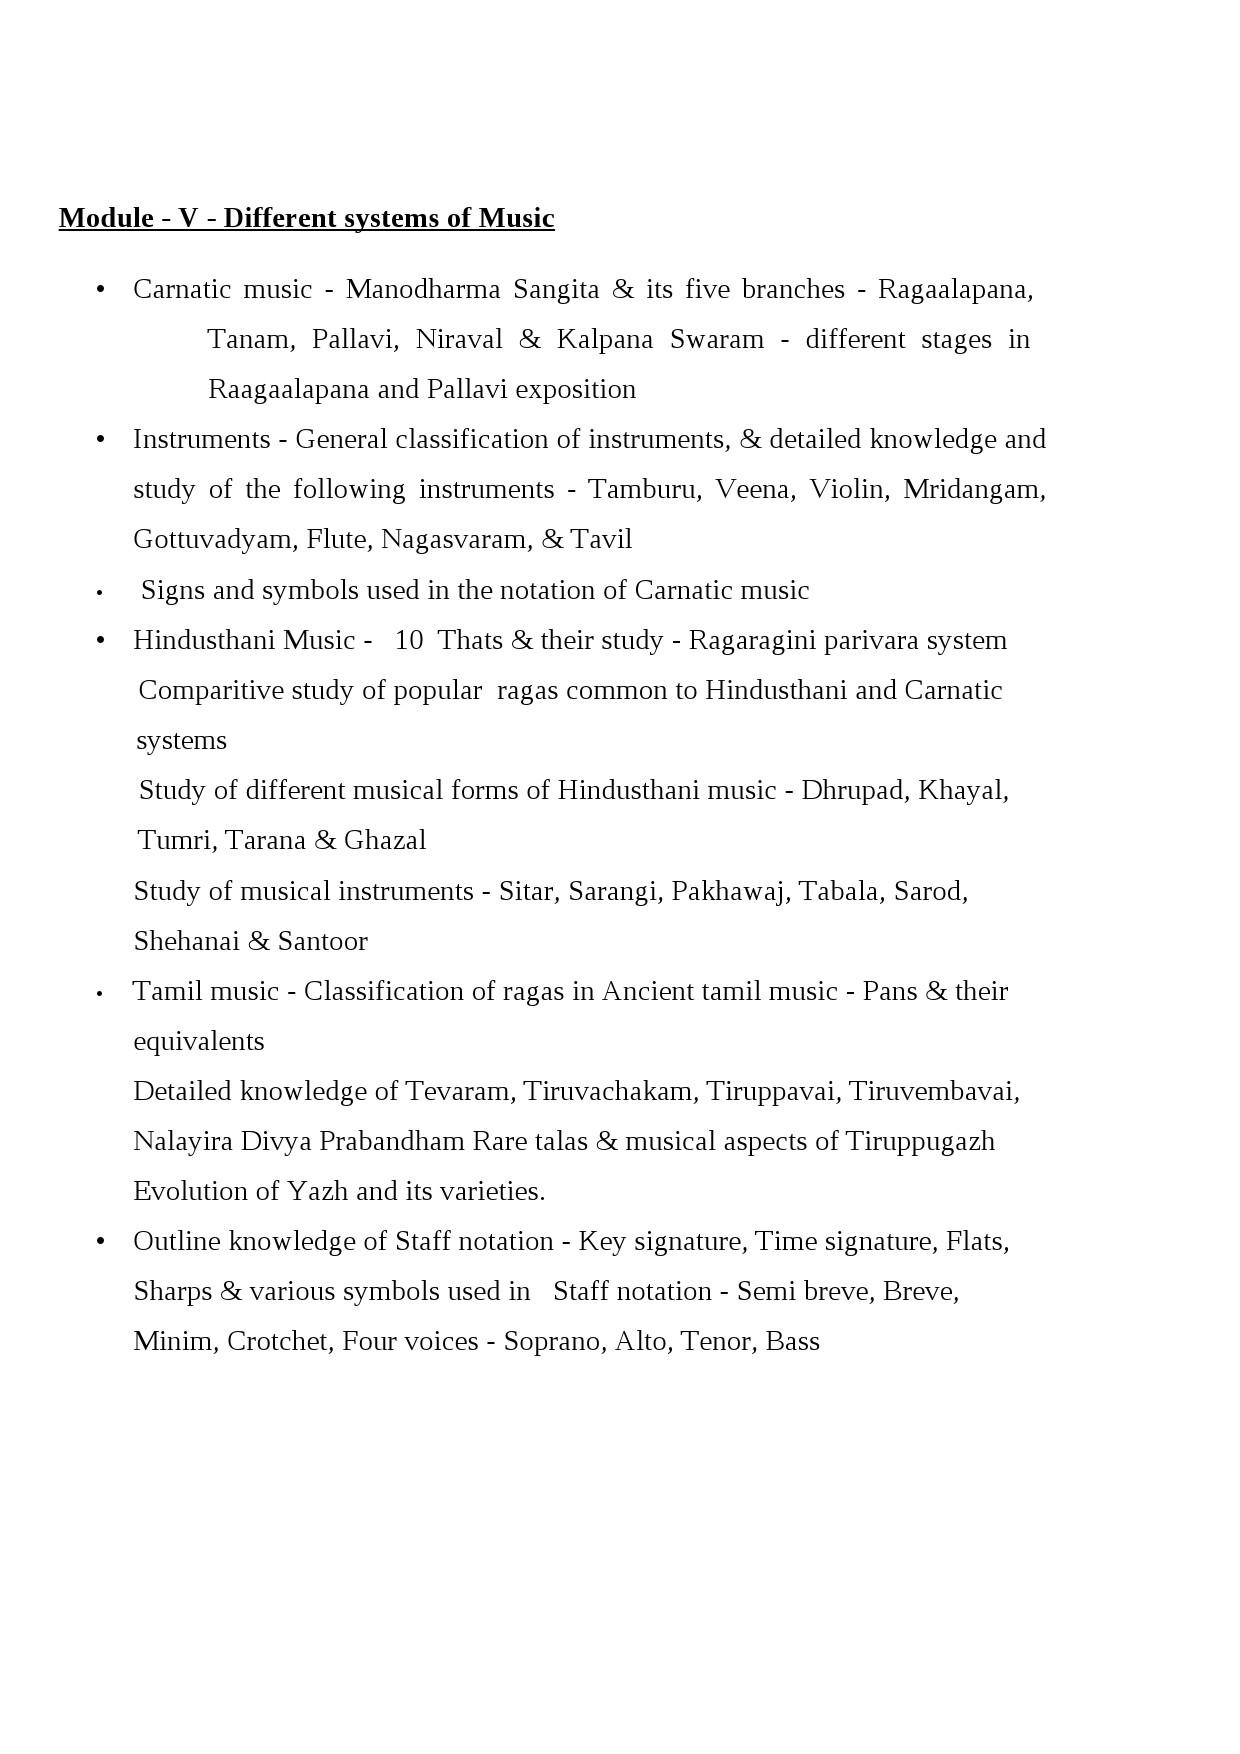 Humanities Syllabus for Kerala PSC 2021 Exam - Notification Image 17